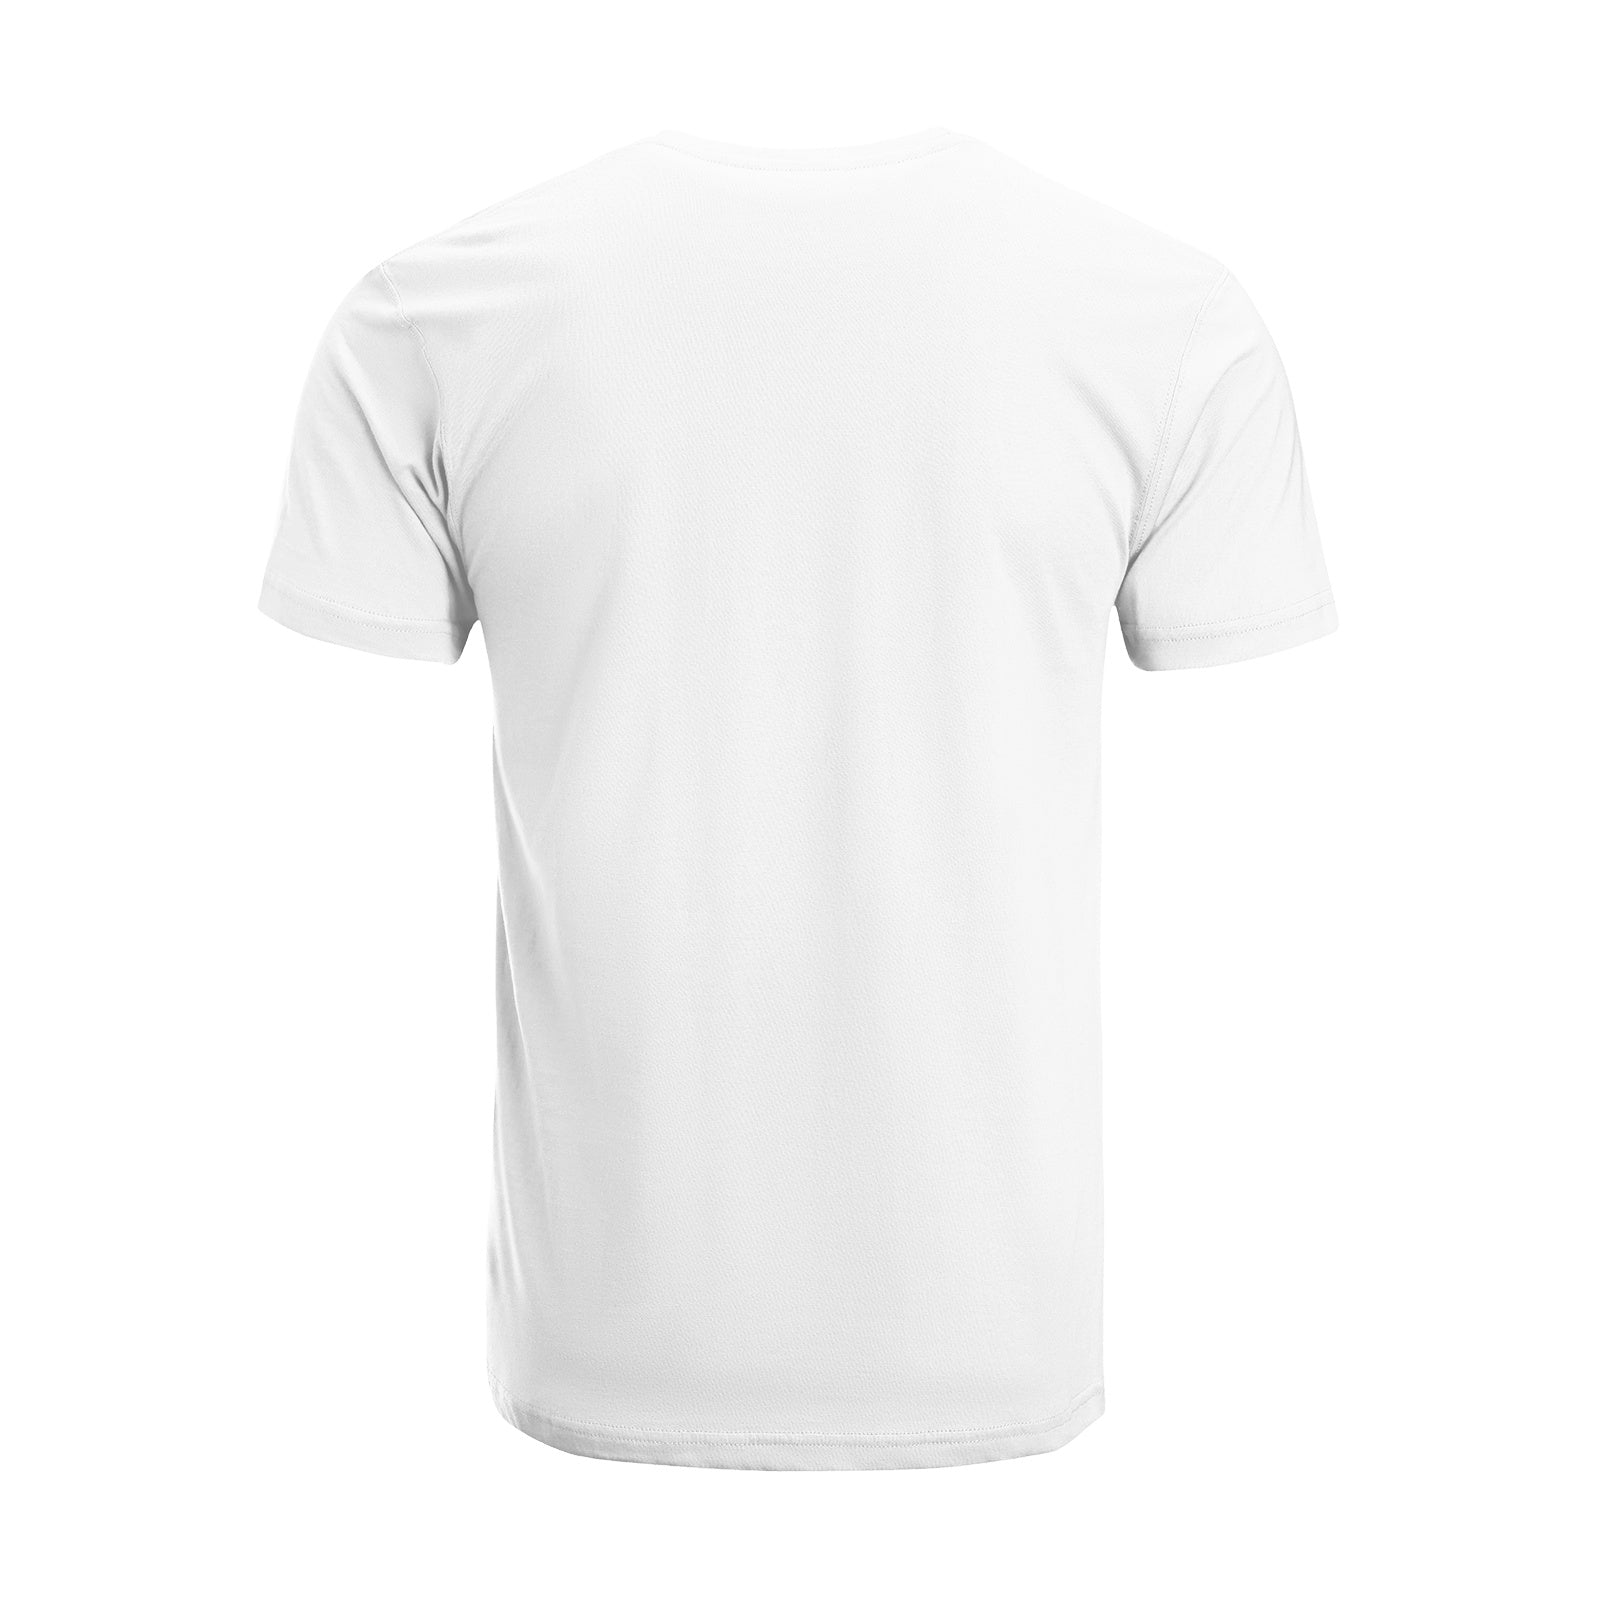 Unisex Short Sleeve Crew Neck Cotton Jersey T-Shirt CAT 16 - Tara-Outfits.com